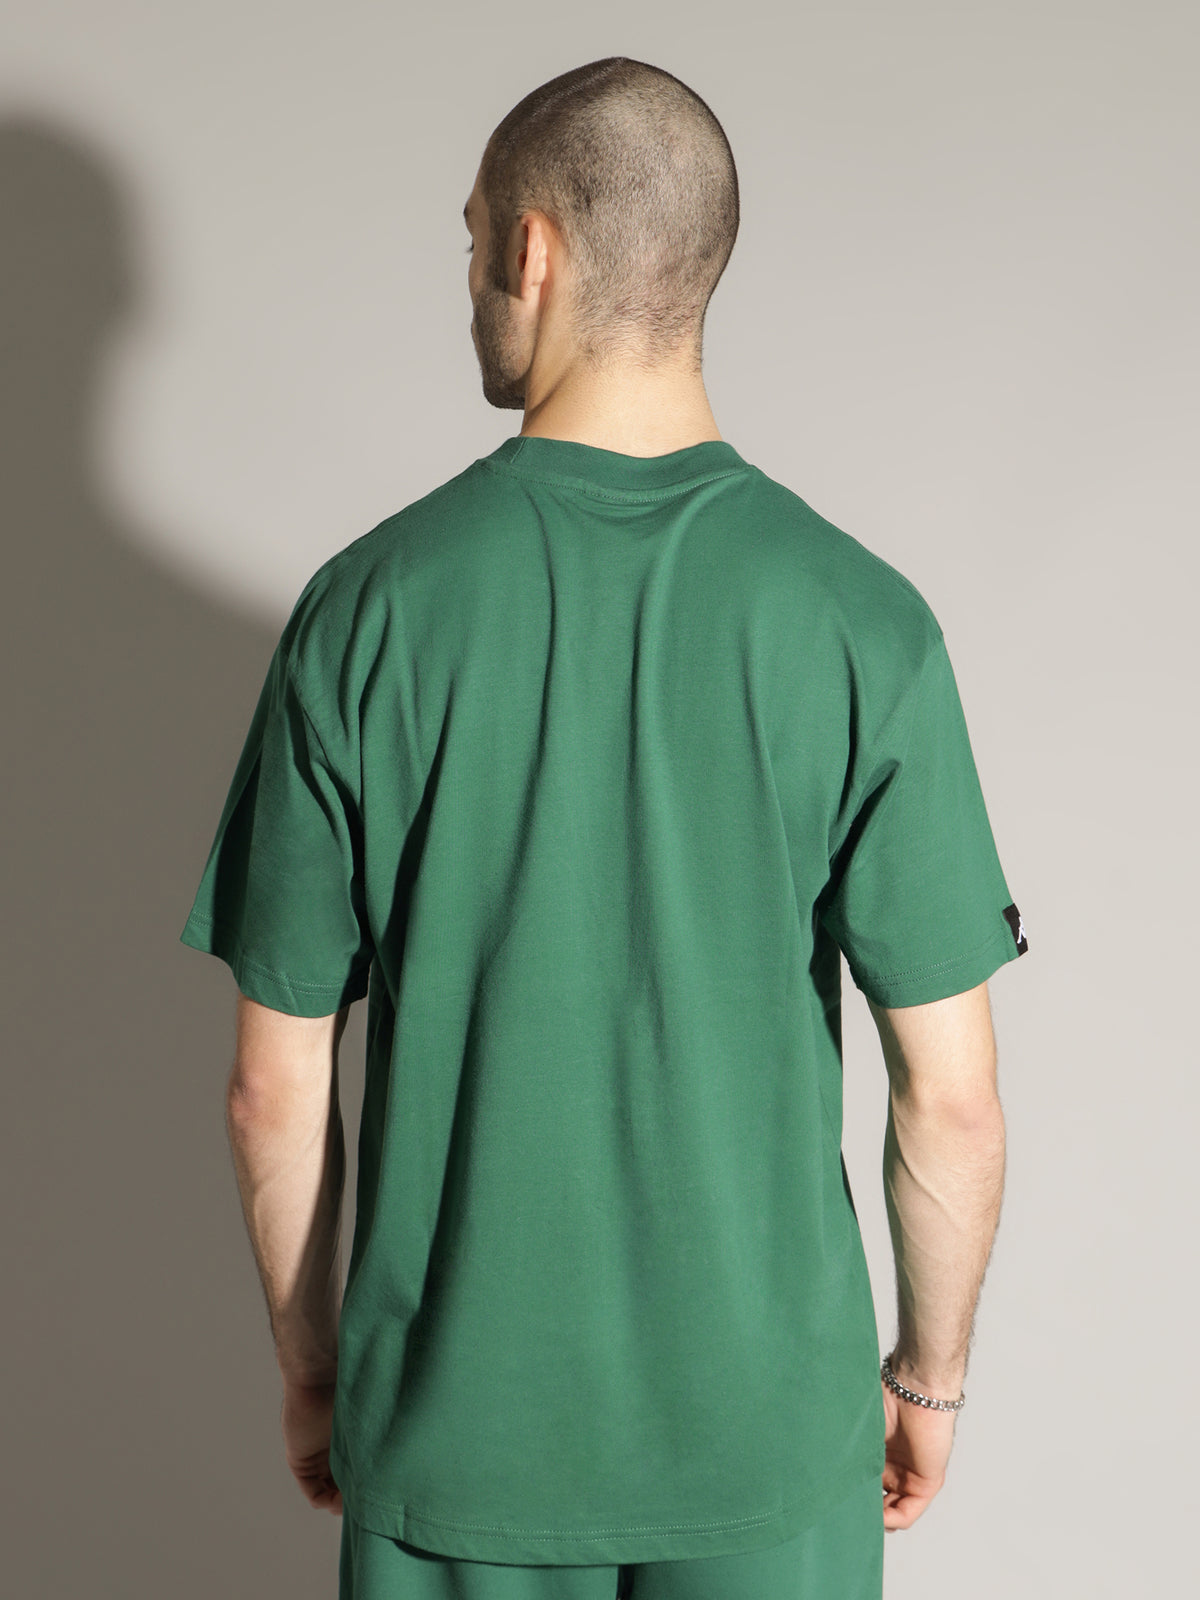 Authentic Senoc T-Shirt in Green Posy